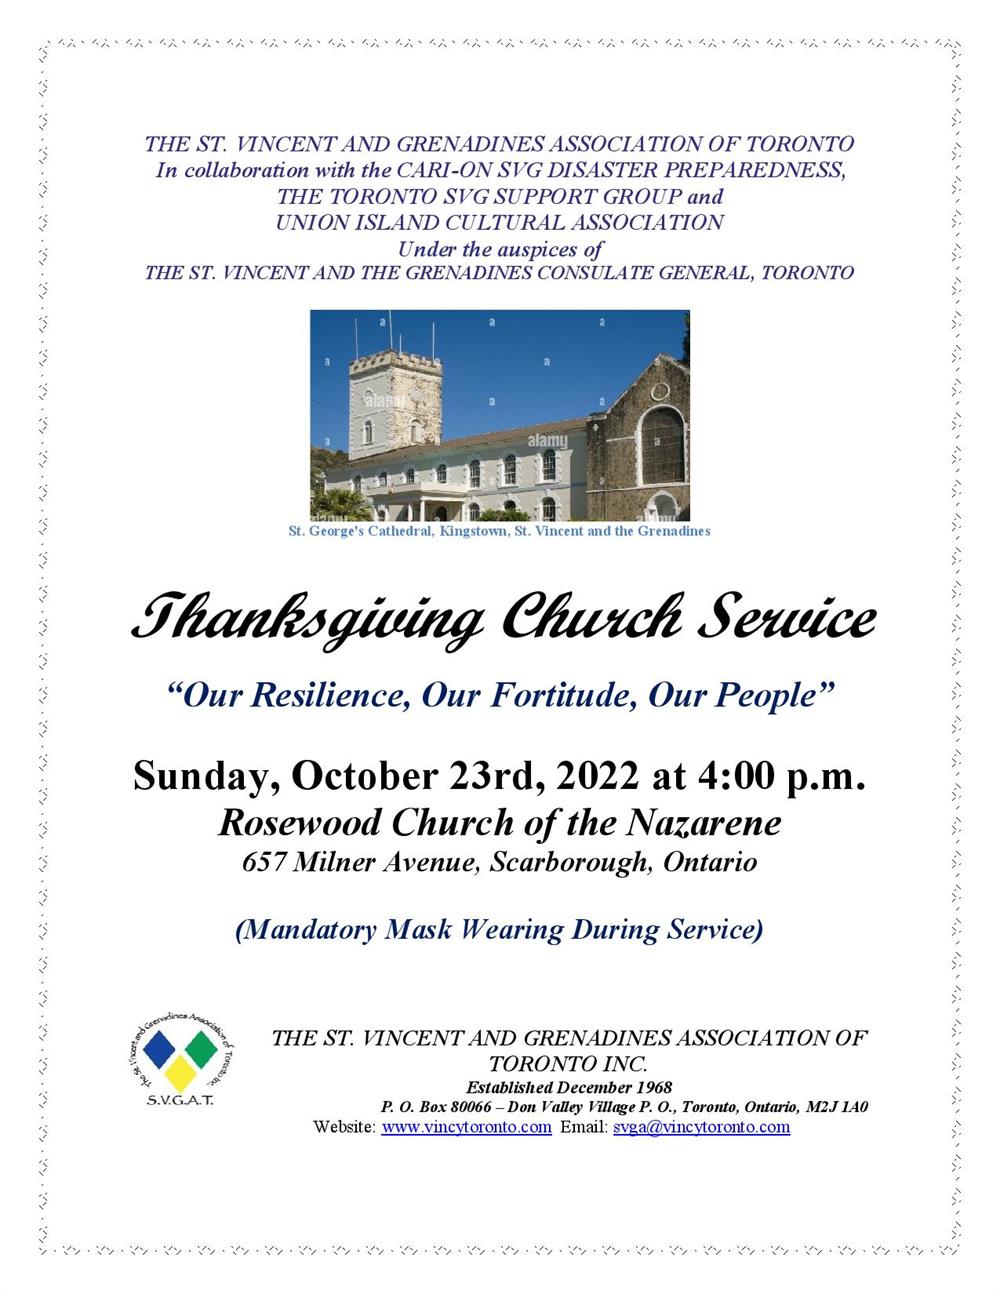 Sunday October 23, 2022 - Thanksgiving Church Service